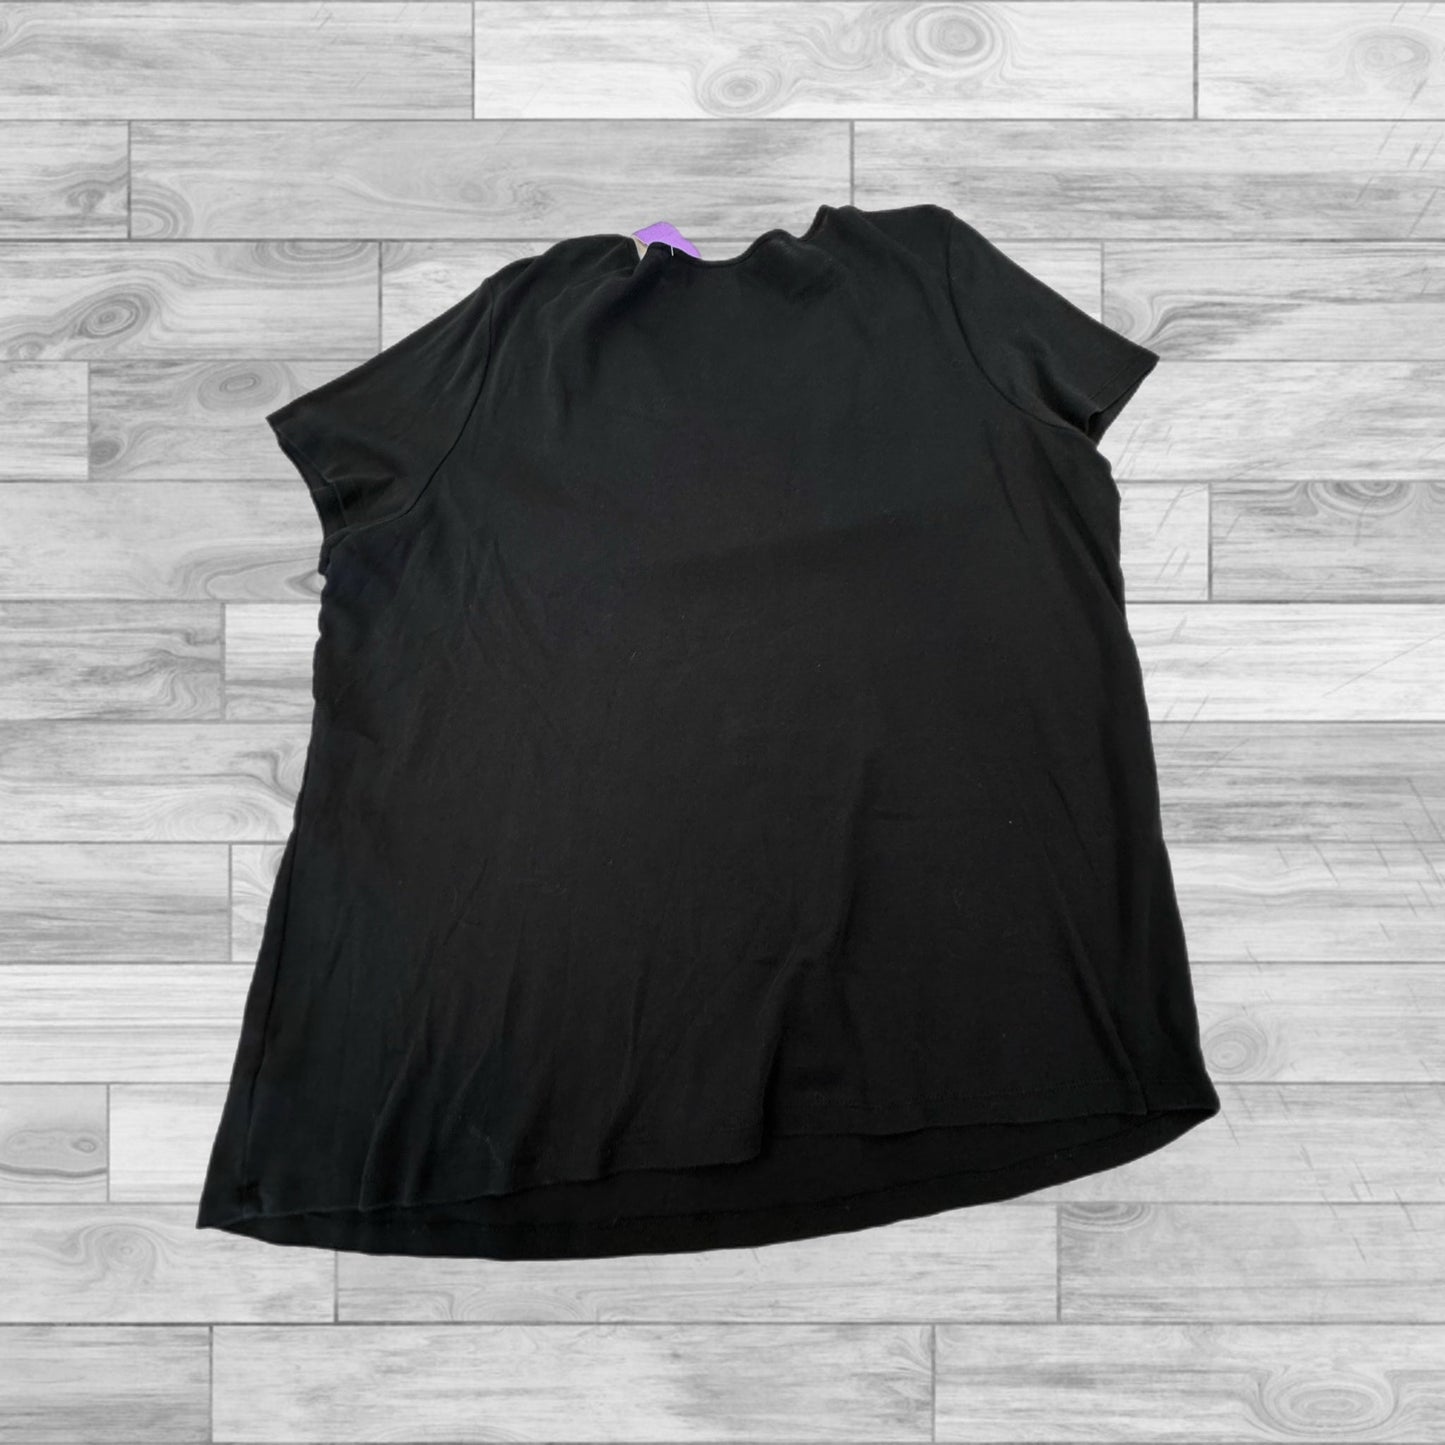 Black Top Short Sleeve Talbots, Size 3x